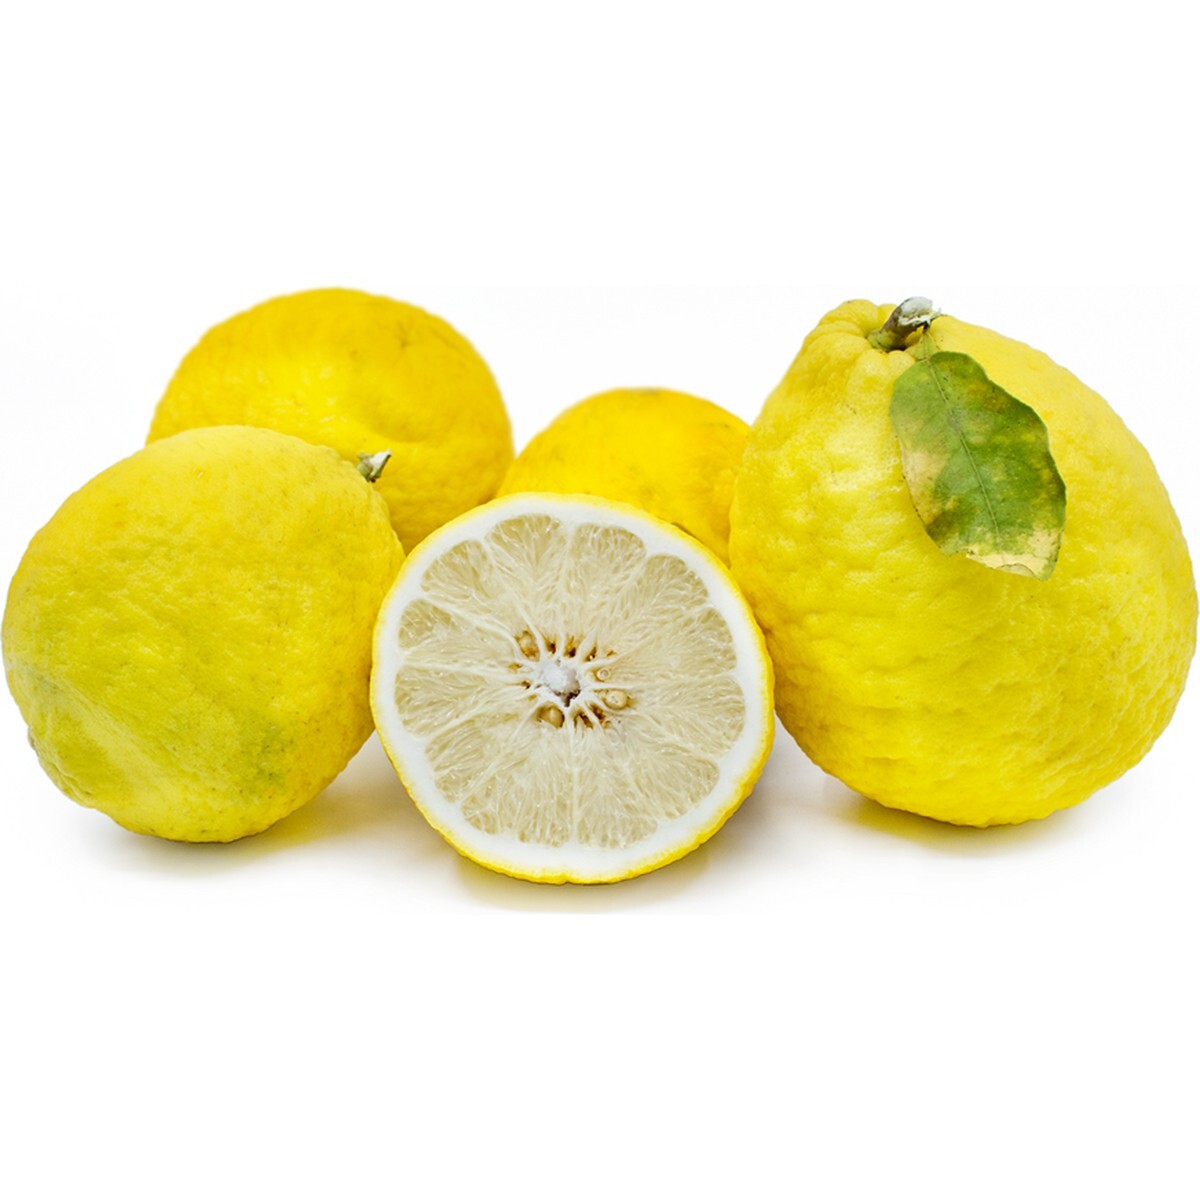 Lemon Big Imported  approx. 450gm-500gm